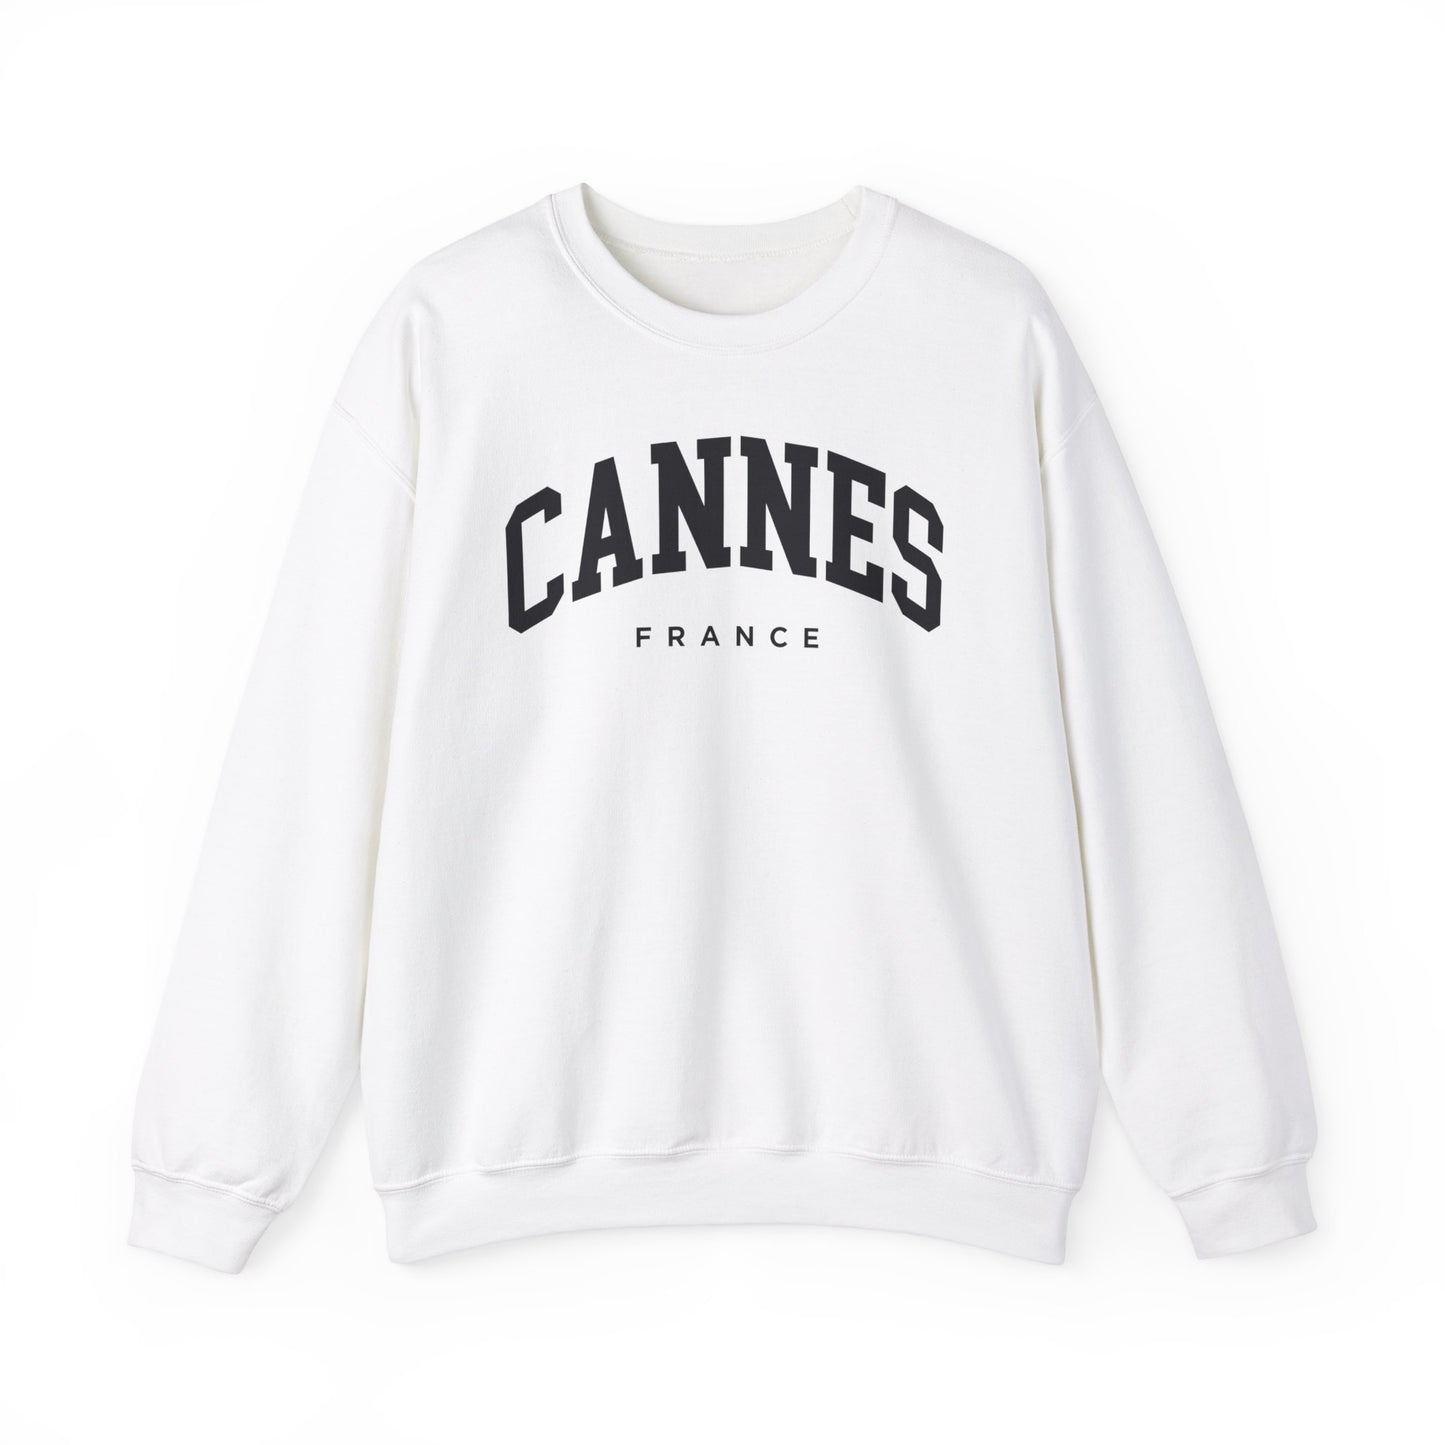 Cannes France Sweatshirt